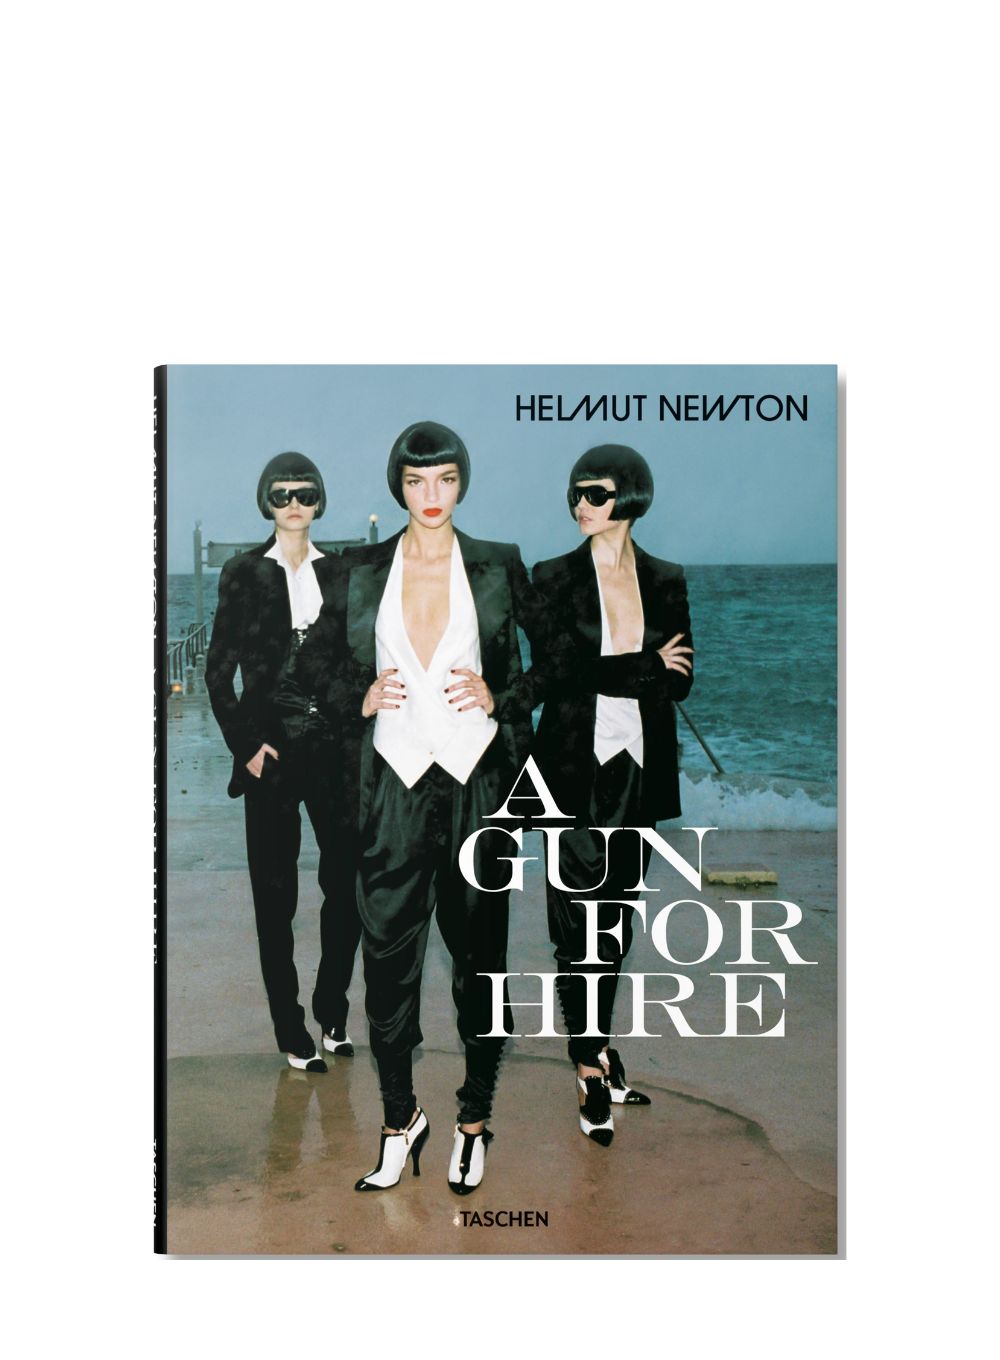 TASCHEN | Helmut Newton A Gun For Hire